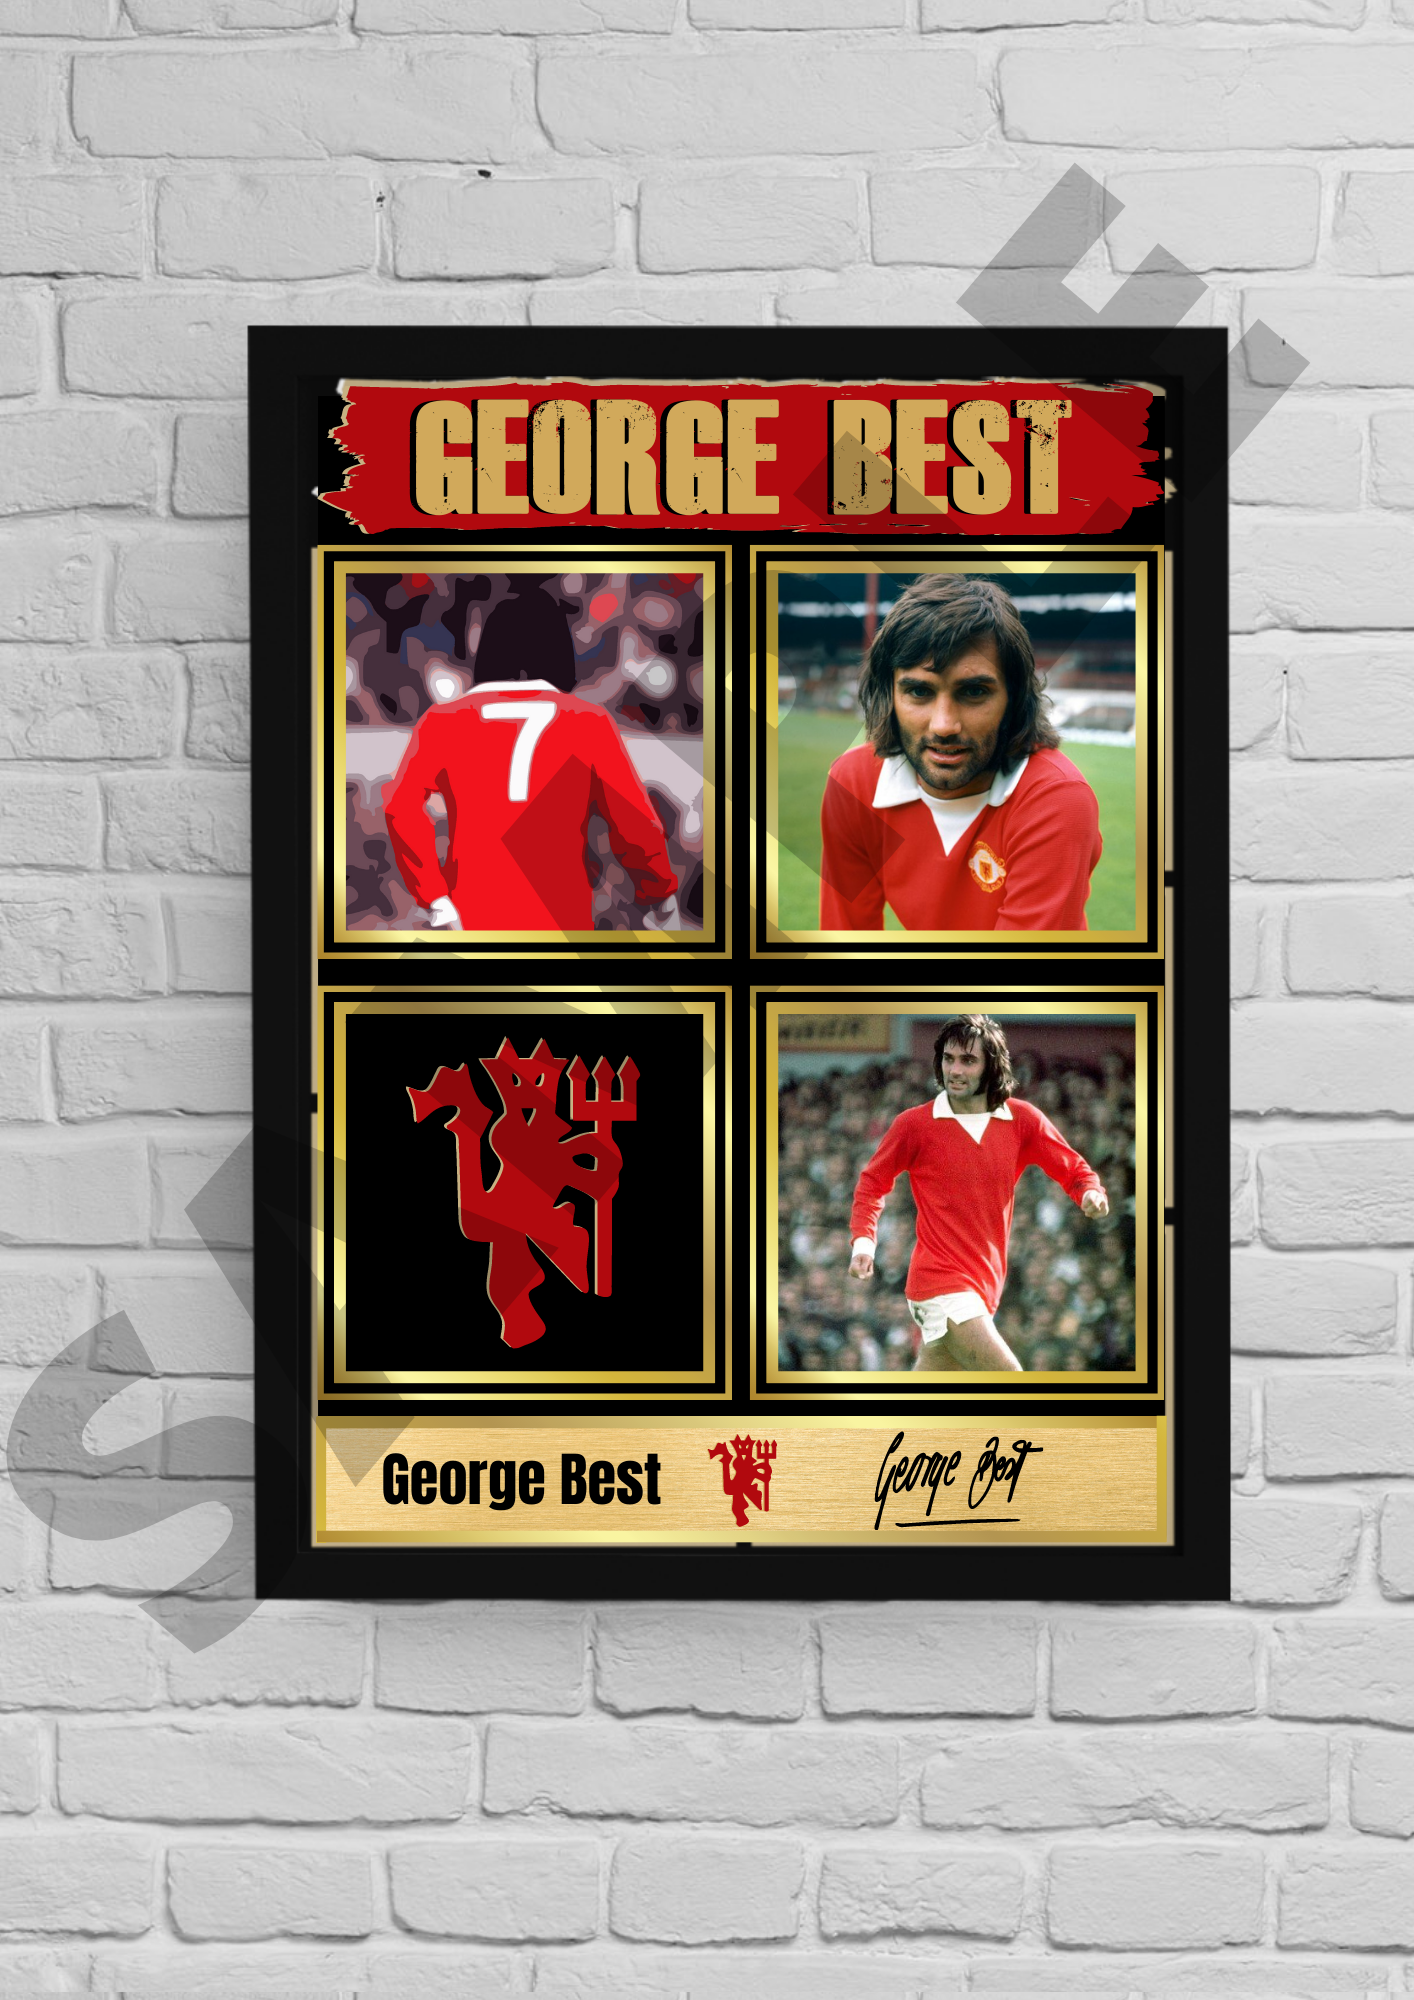 George Best (Man Utd) Football collectable/memorabilia/#46 - Signed print